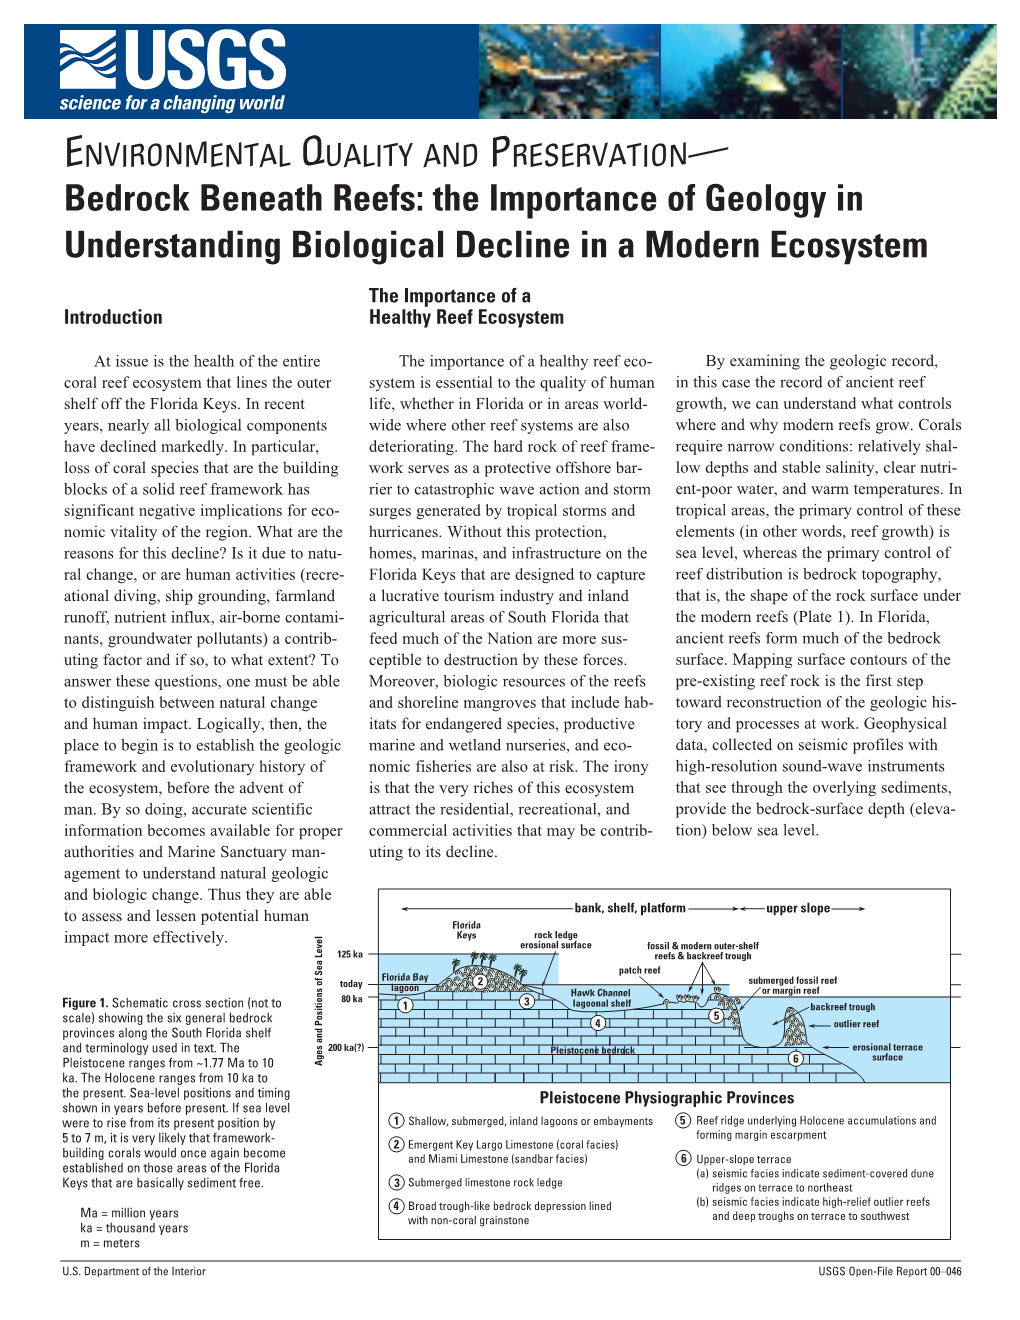 Bedrock Beneath Reefs: the Importance of Geology in Understanding Biological Decline in a Modern Ecosystem